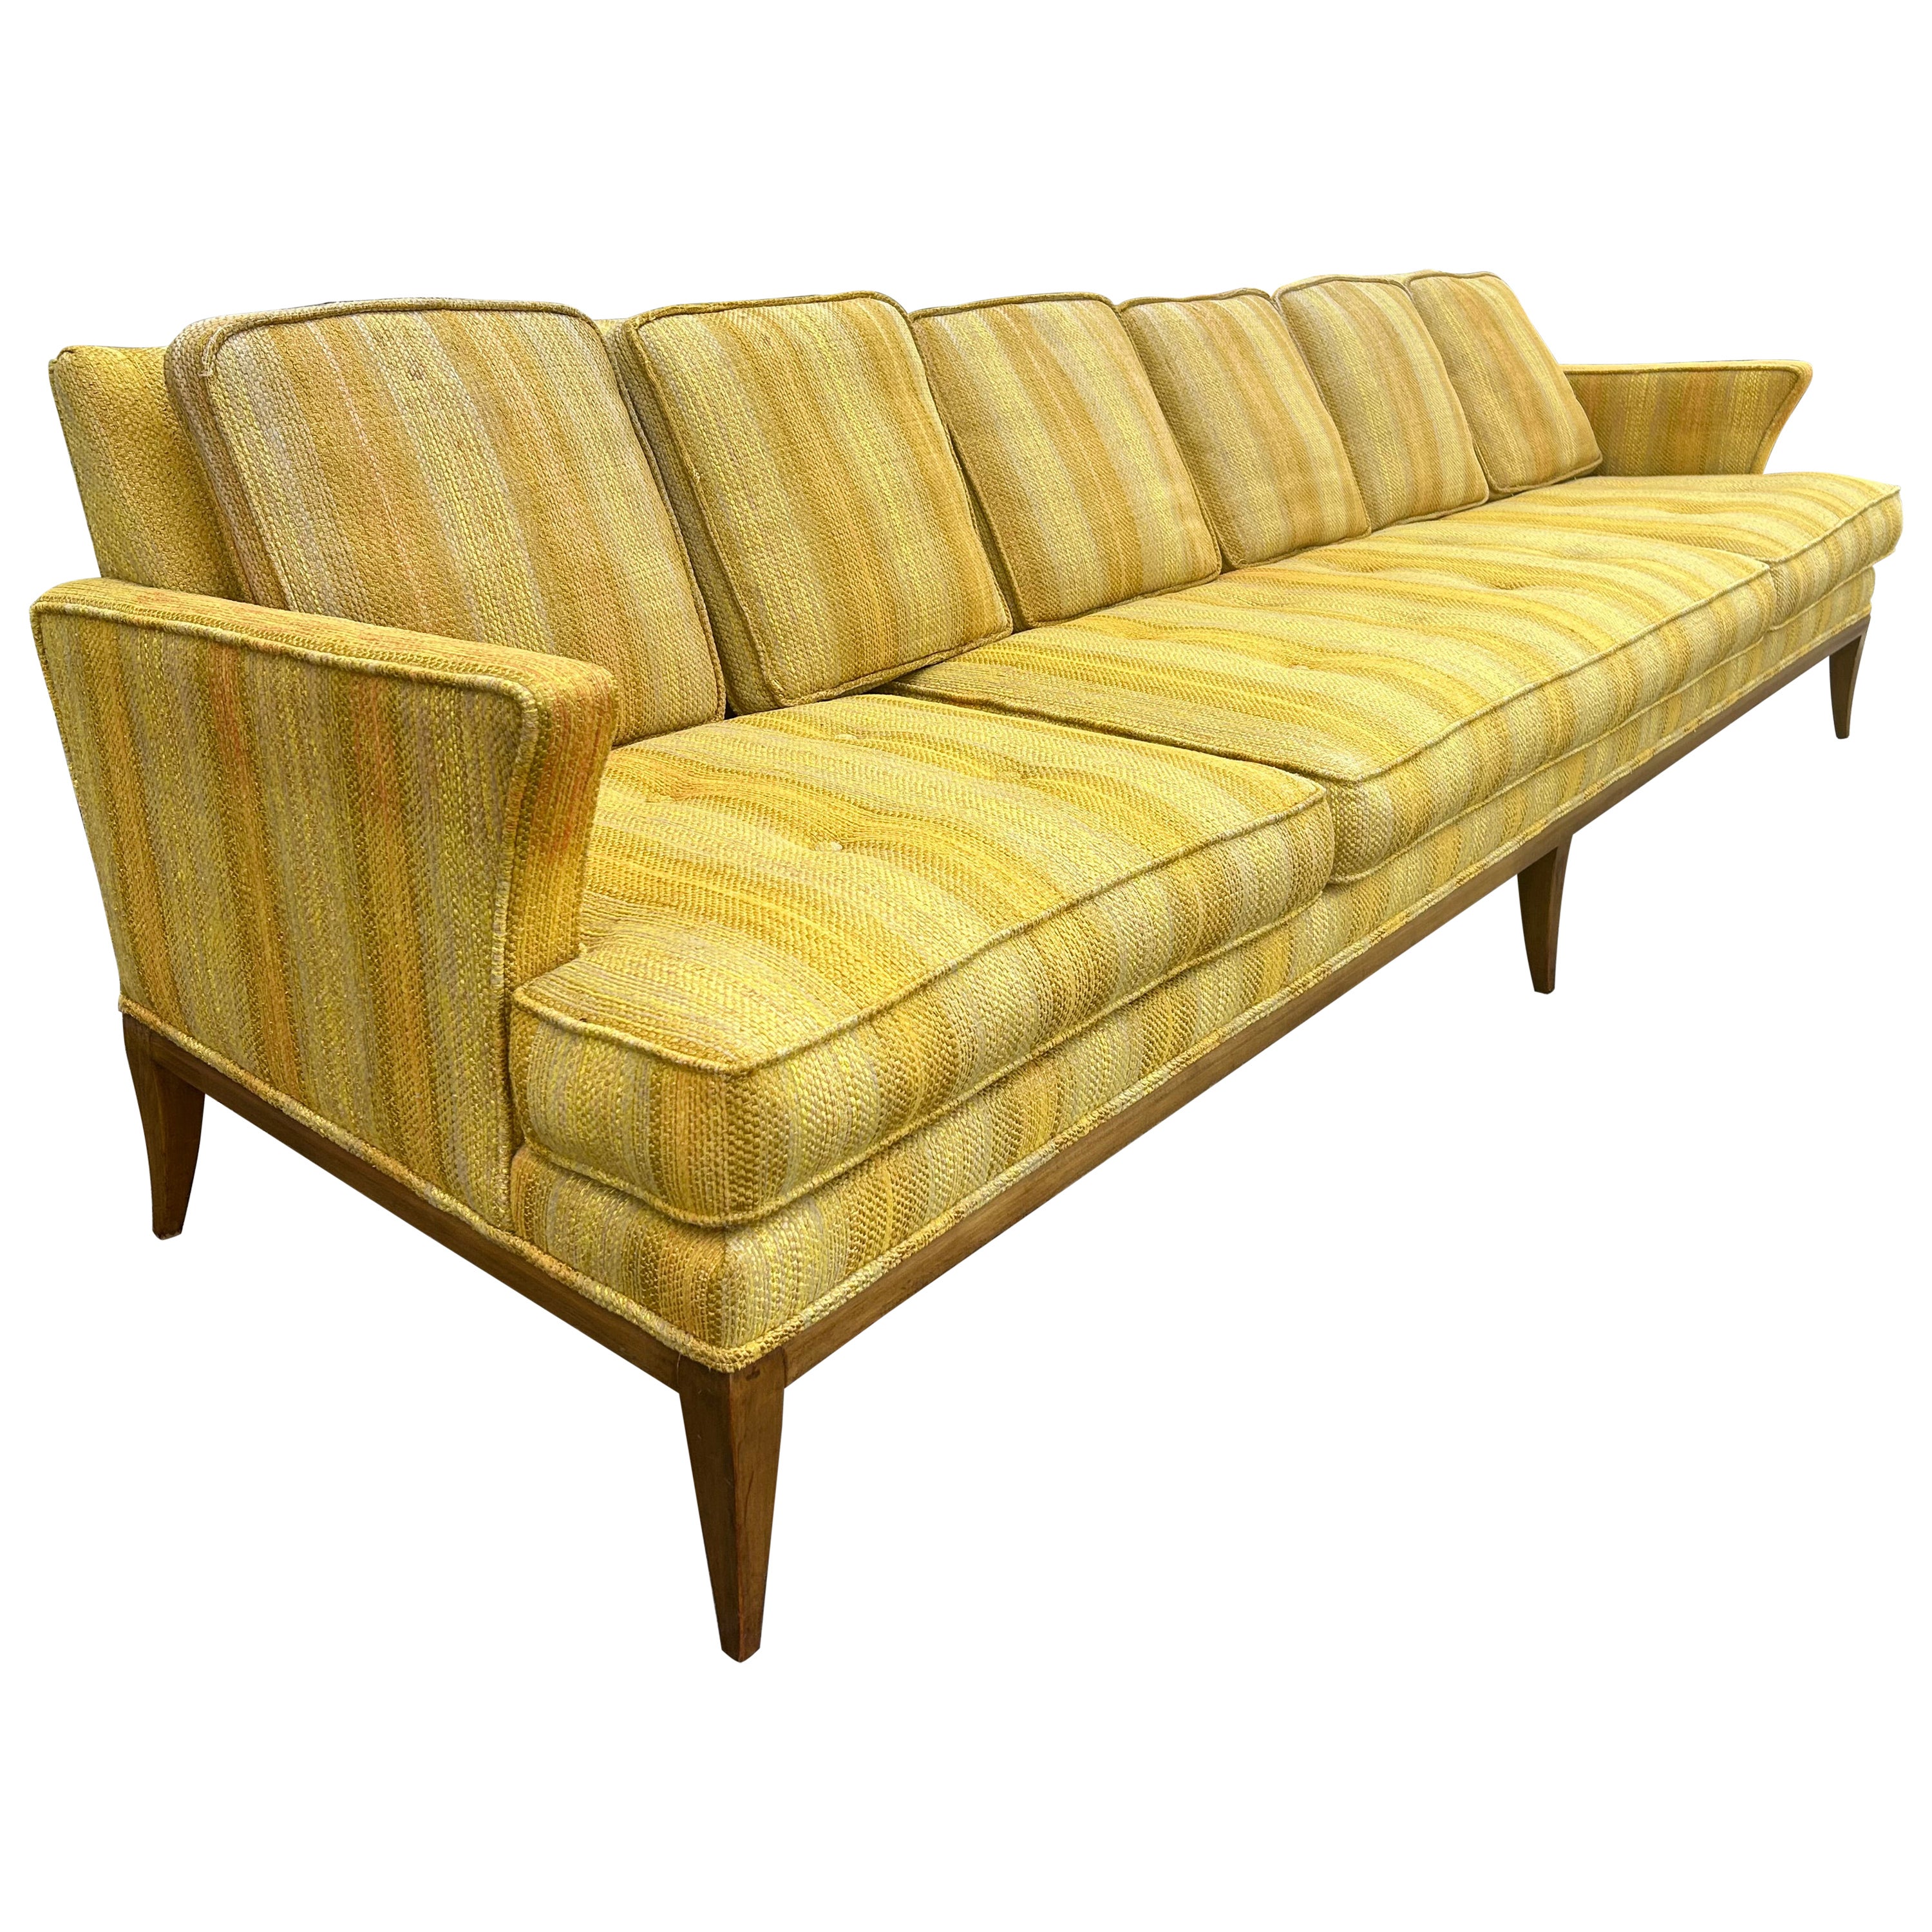 Handsome Tomlinson style X-Long Sofa Pecan Wood Sofa Mid-Century Modern For Sale